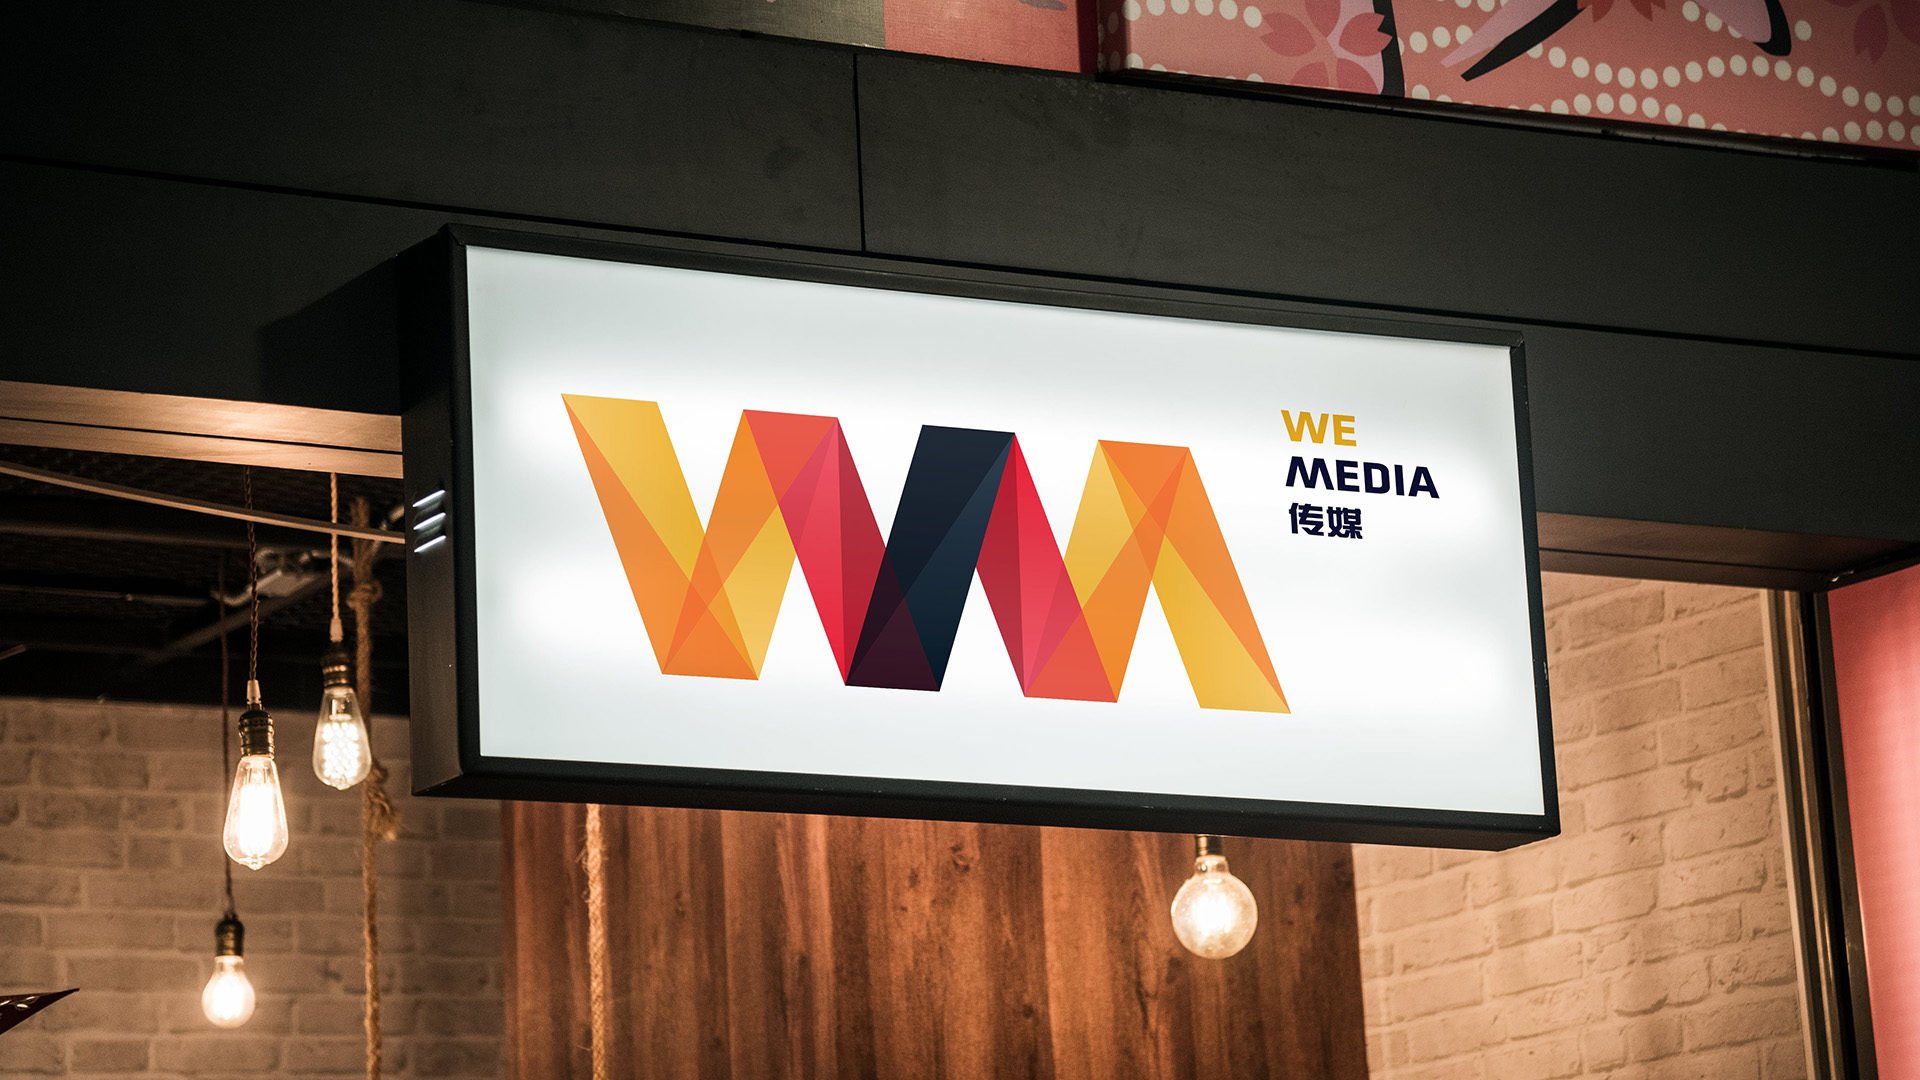 WeMedia